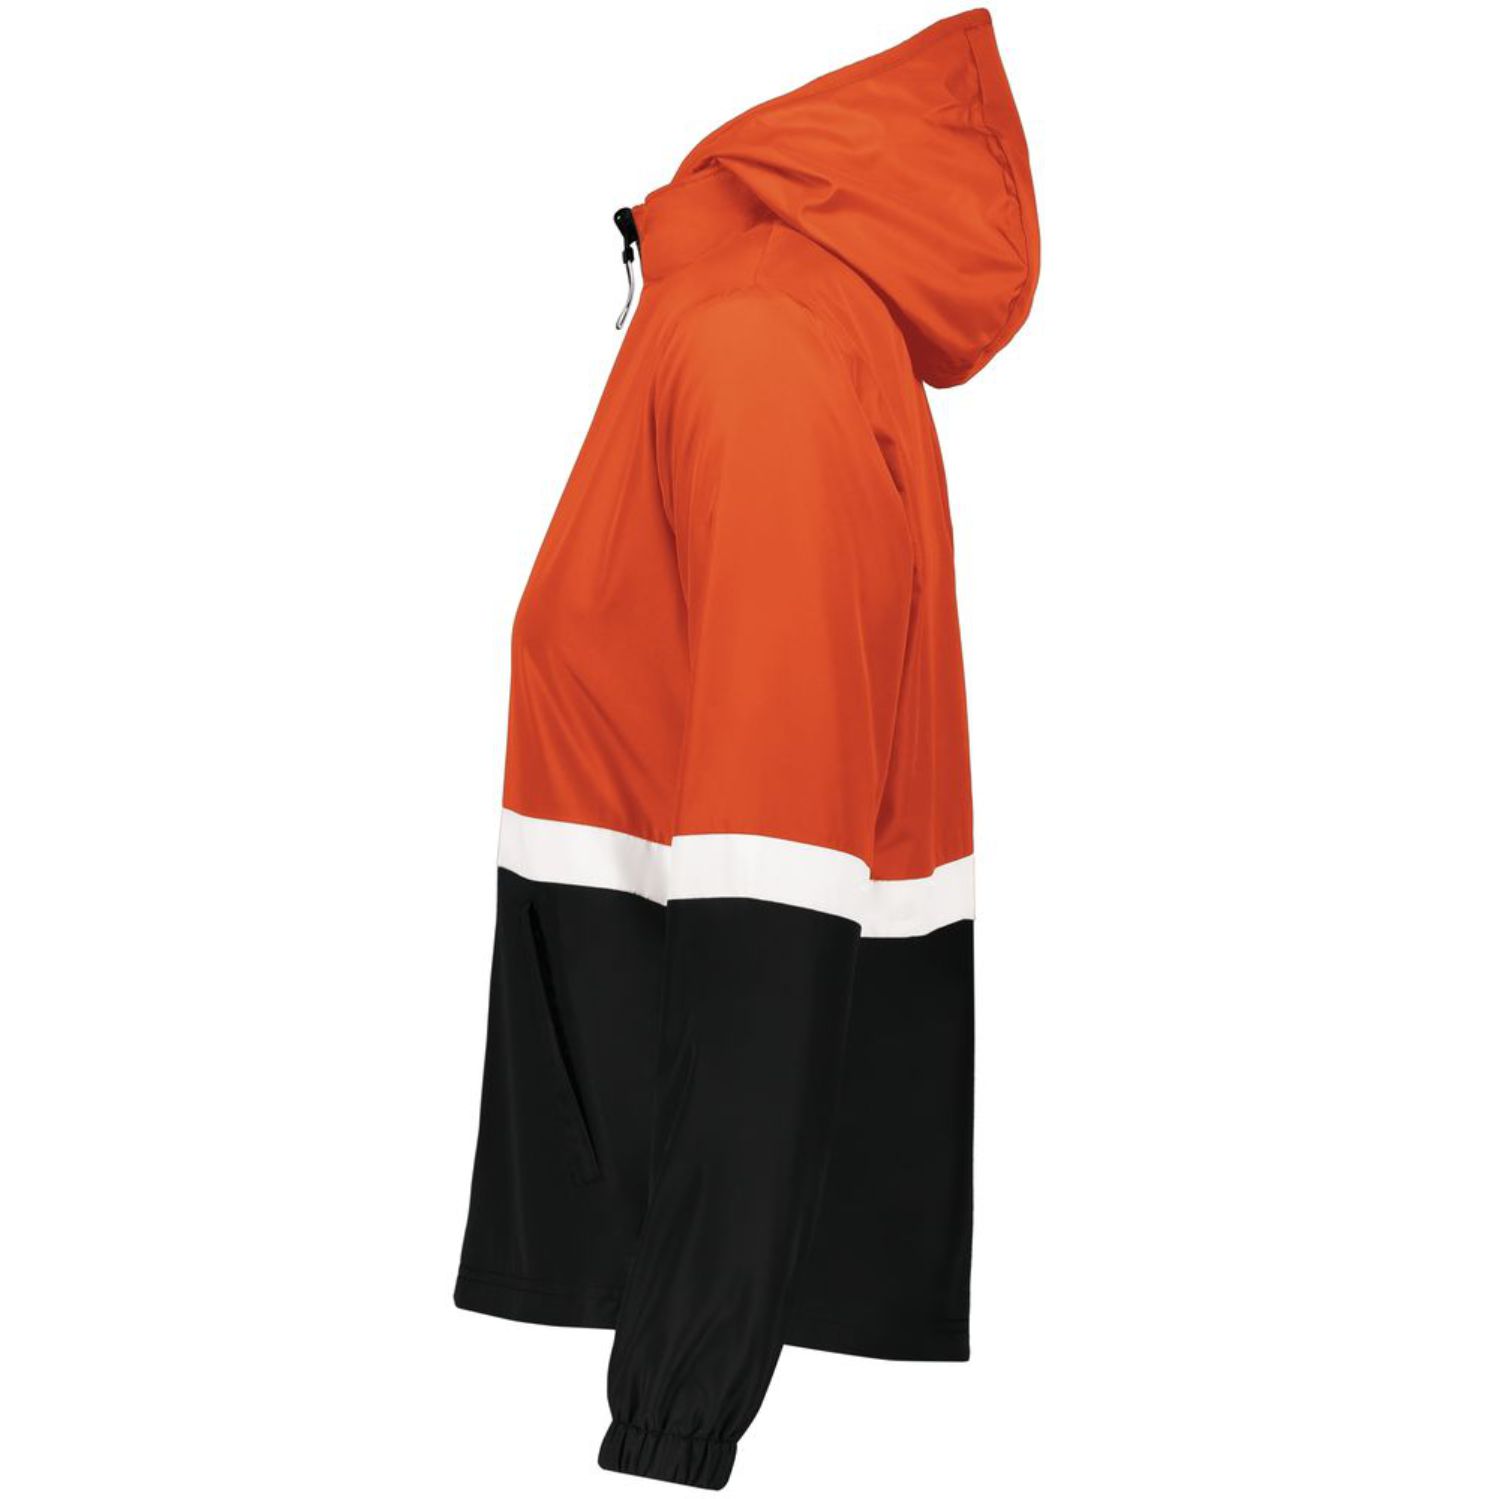 Holloway Ladies Turnabout Reversible Jacket #229787 Orange / Black Side